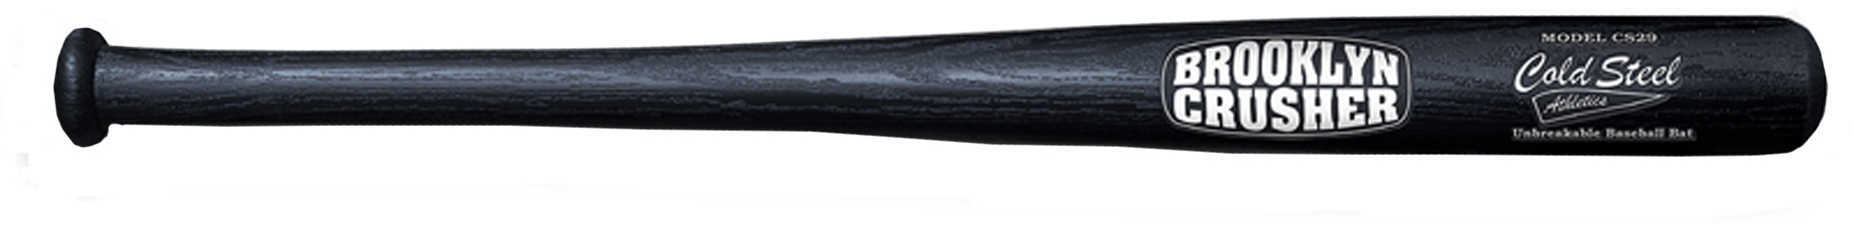 Cold Steel Brooklyn Crusher Defense Tool Black Polypropylene Bat 29" Box 92BSS